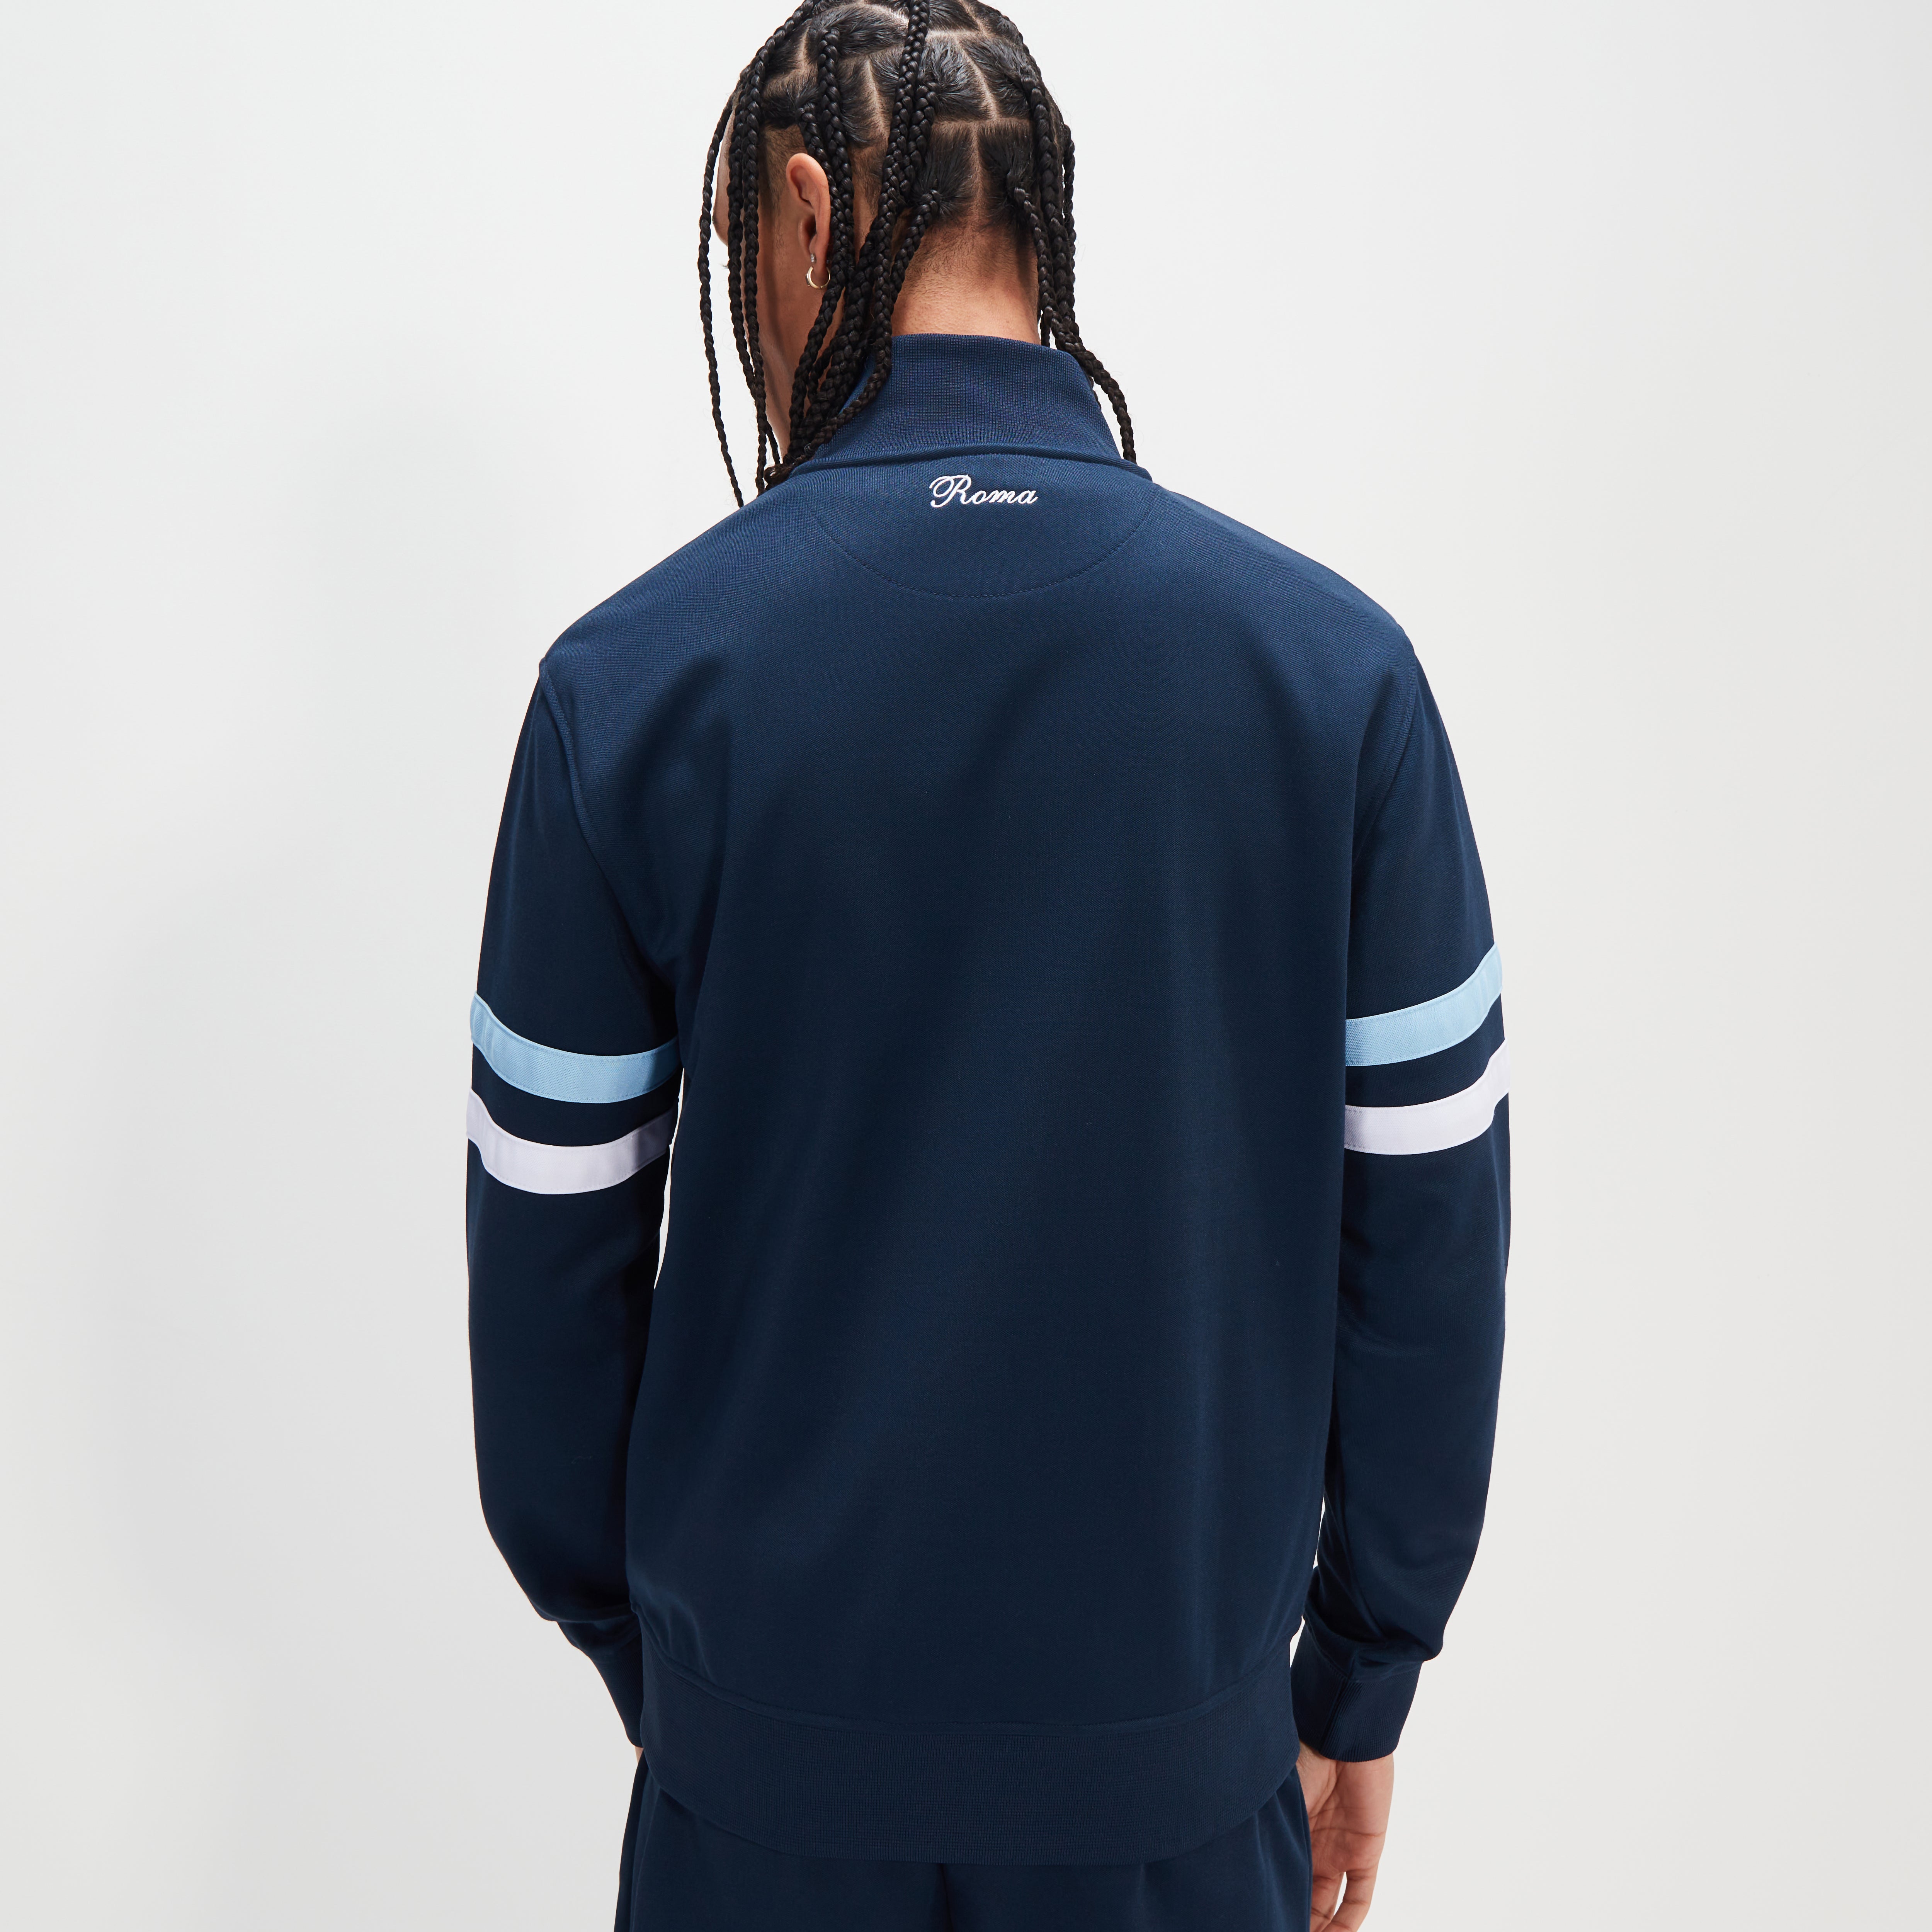 Ellesse Roma Track Top Jacket Navy/Light Blue/White - Raw Menswear